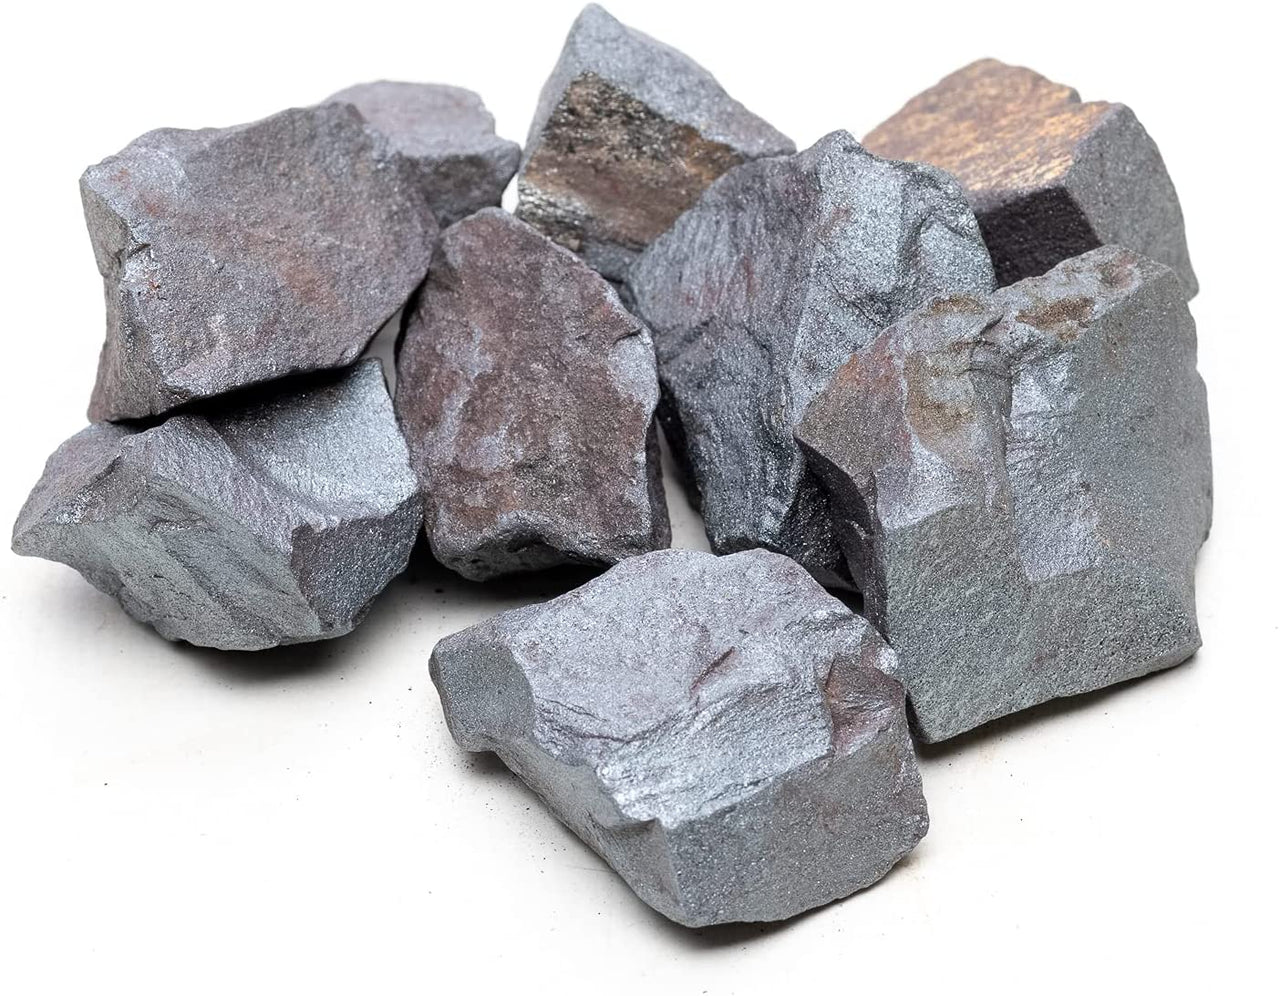 Rough Hematite Crystal Stones 1 lb Bulk